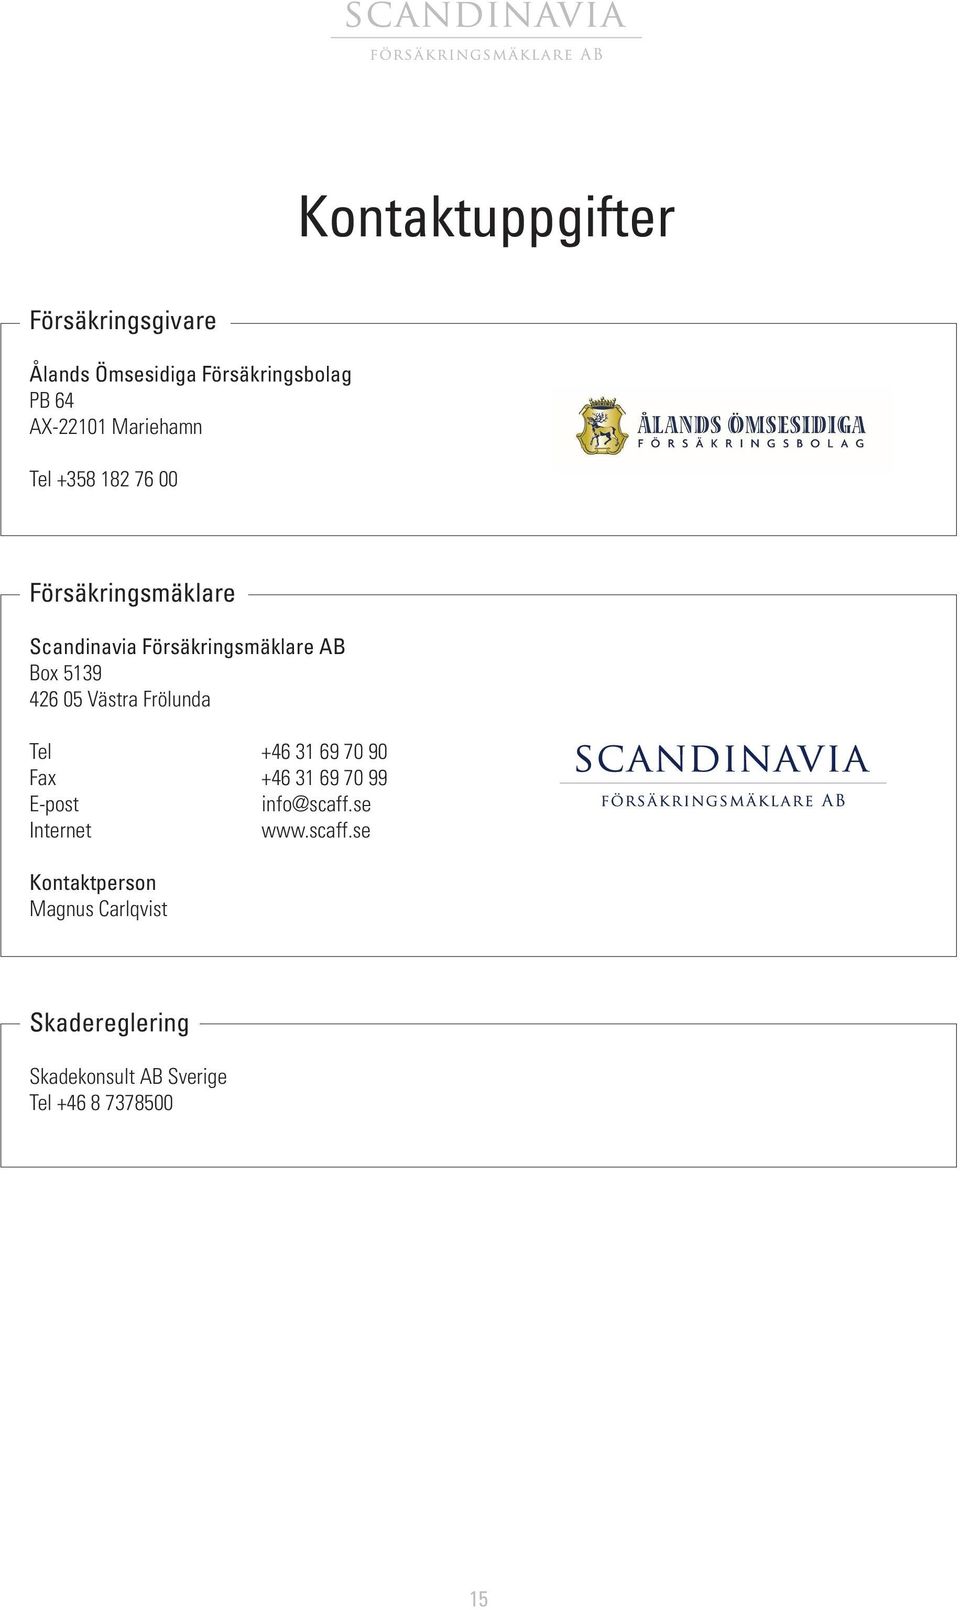 426 05 Västra Frölunda Tel +46 31 69 70 90 Fax +46 31 69 70 99 E-post info@scaff.